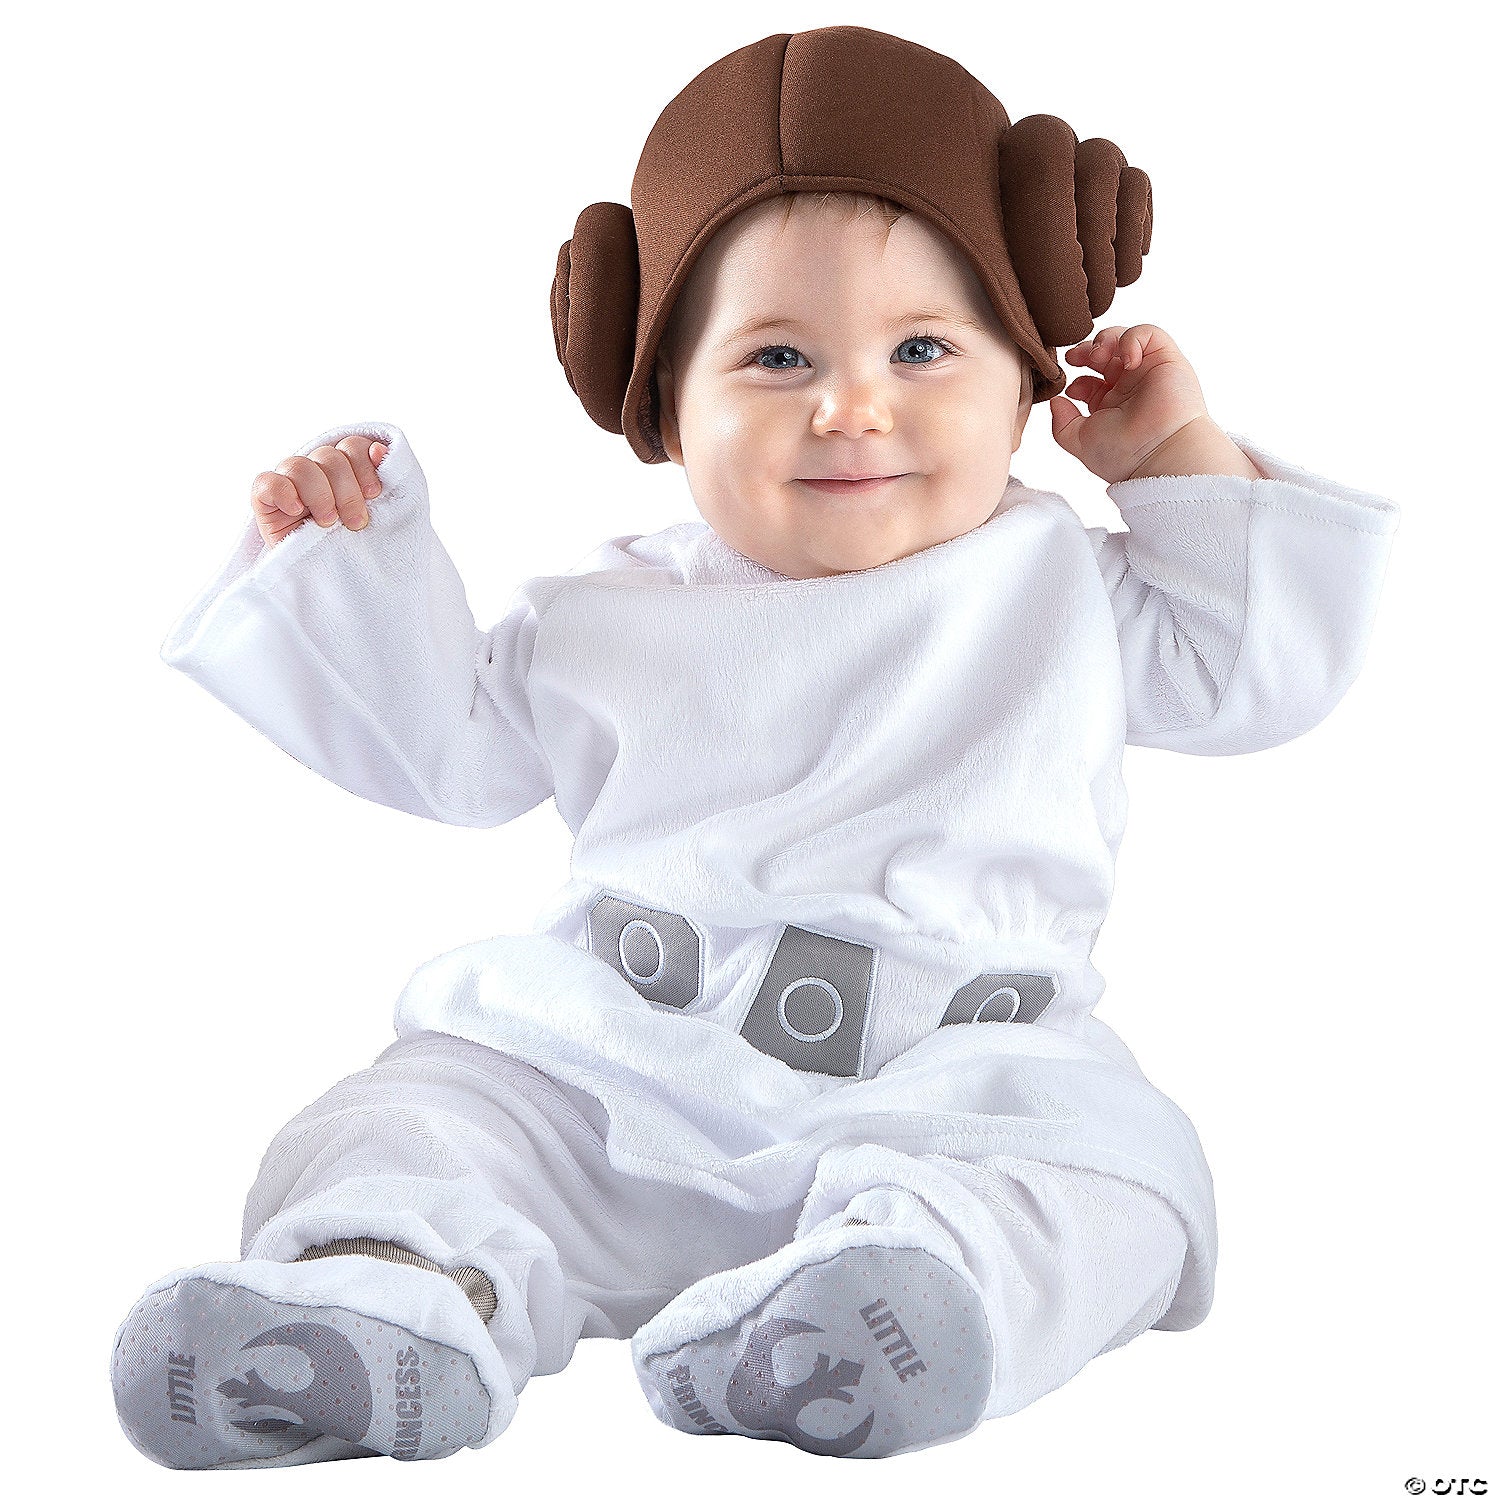 Star Wars - Princess Leia Costume - Infant